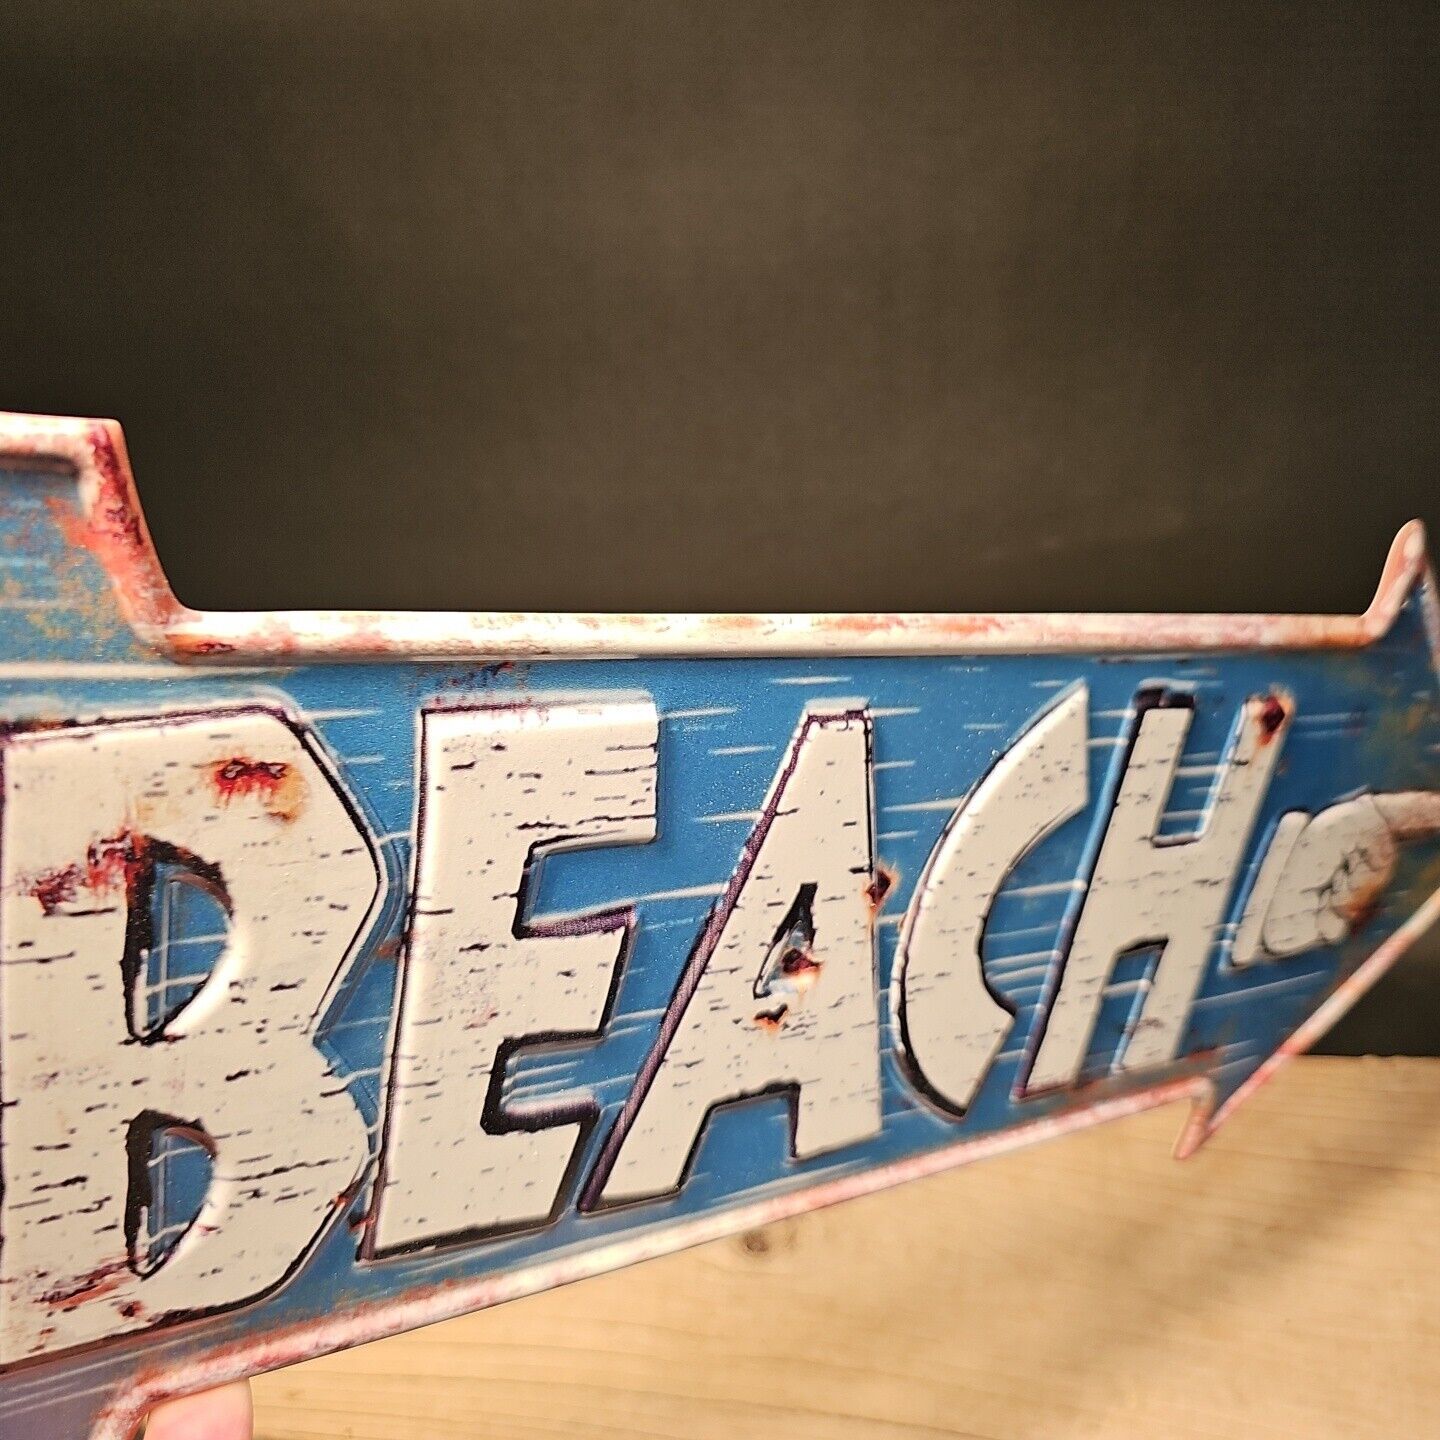 Metal Vintage Style Beach Arrow Coastal Decor Sign